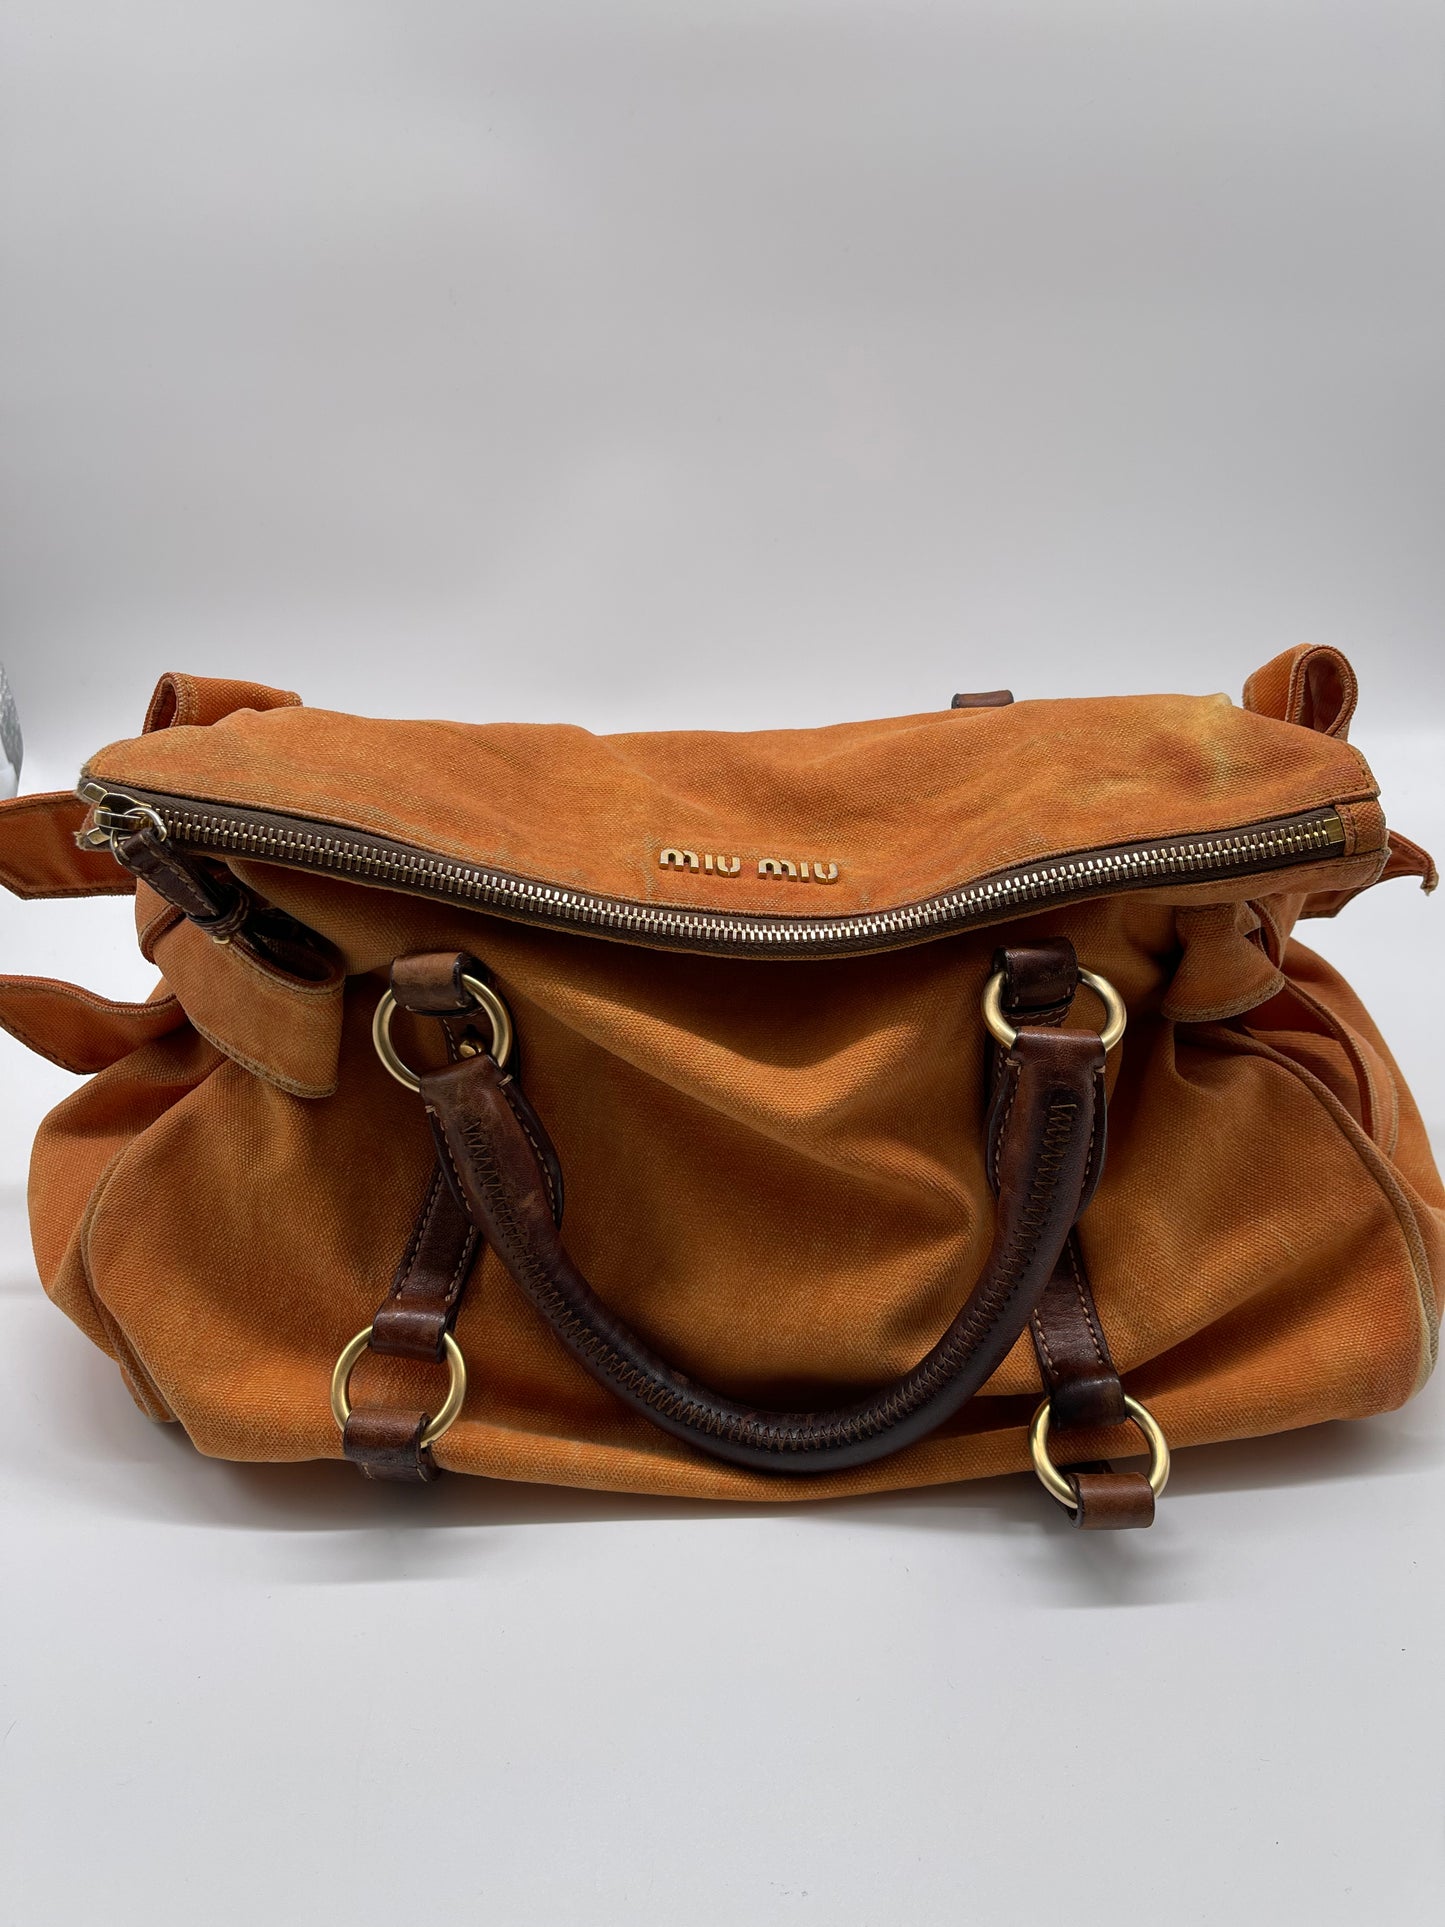 miu miu bow handbag in denim and leather trim